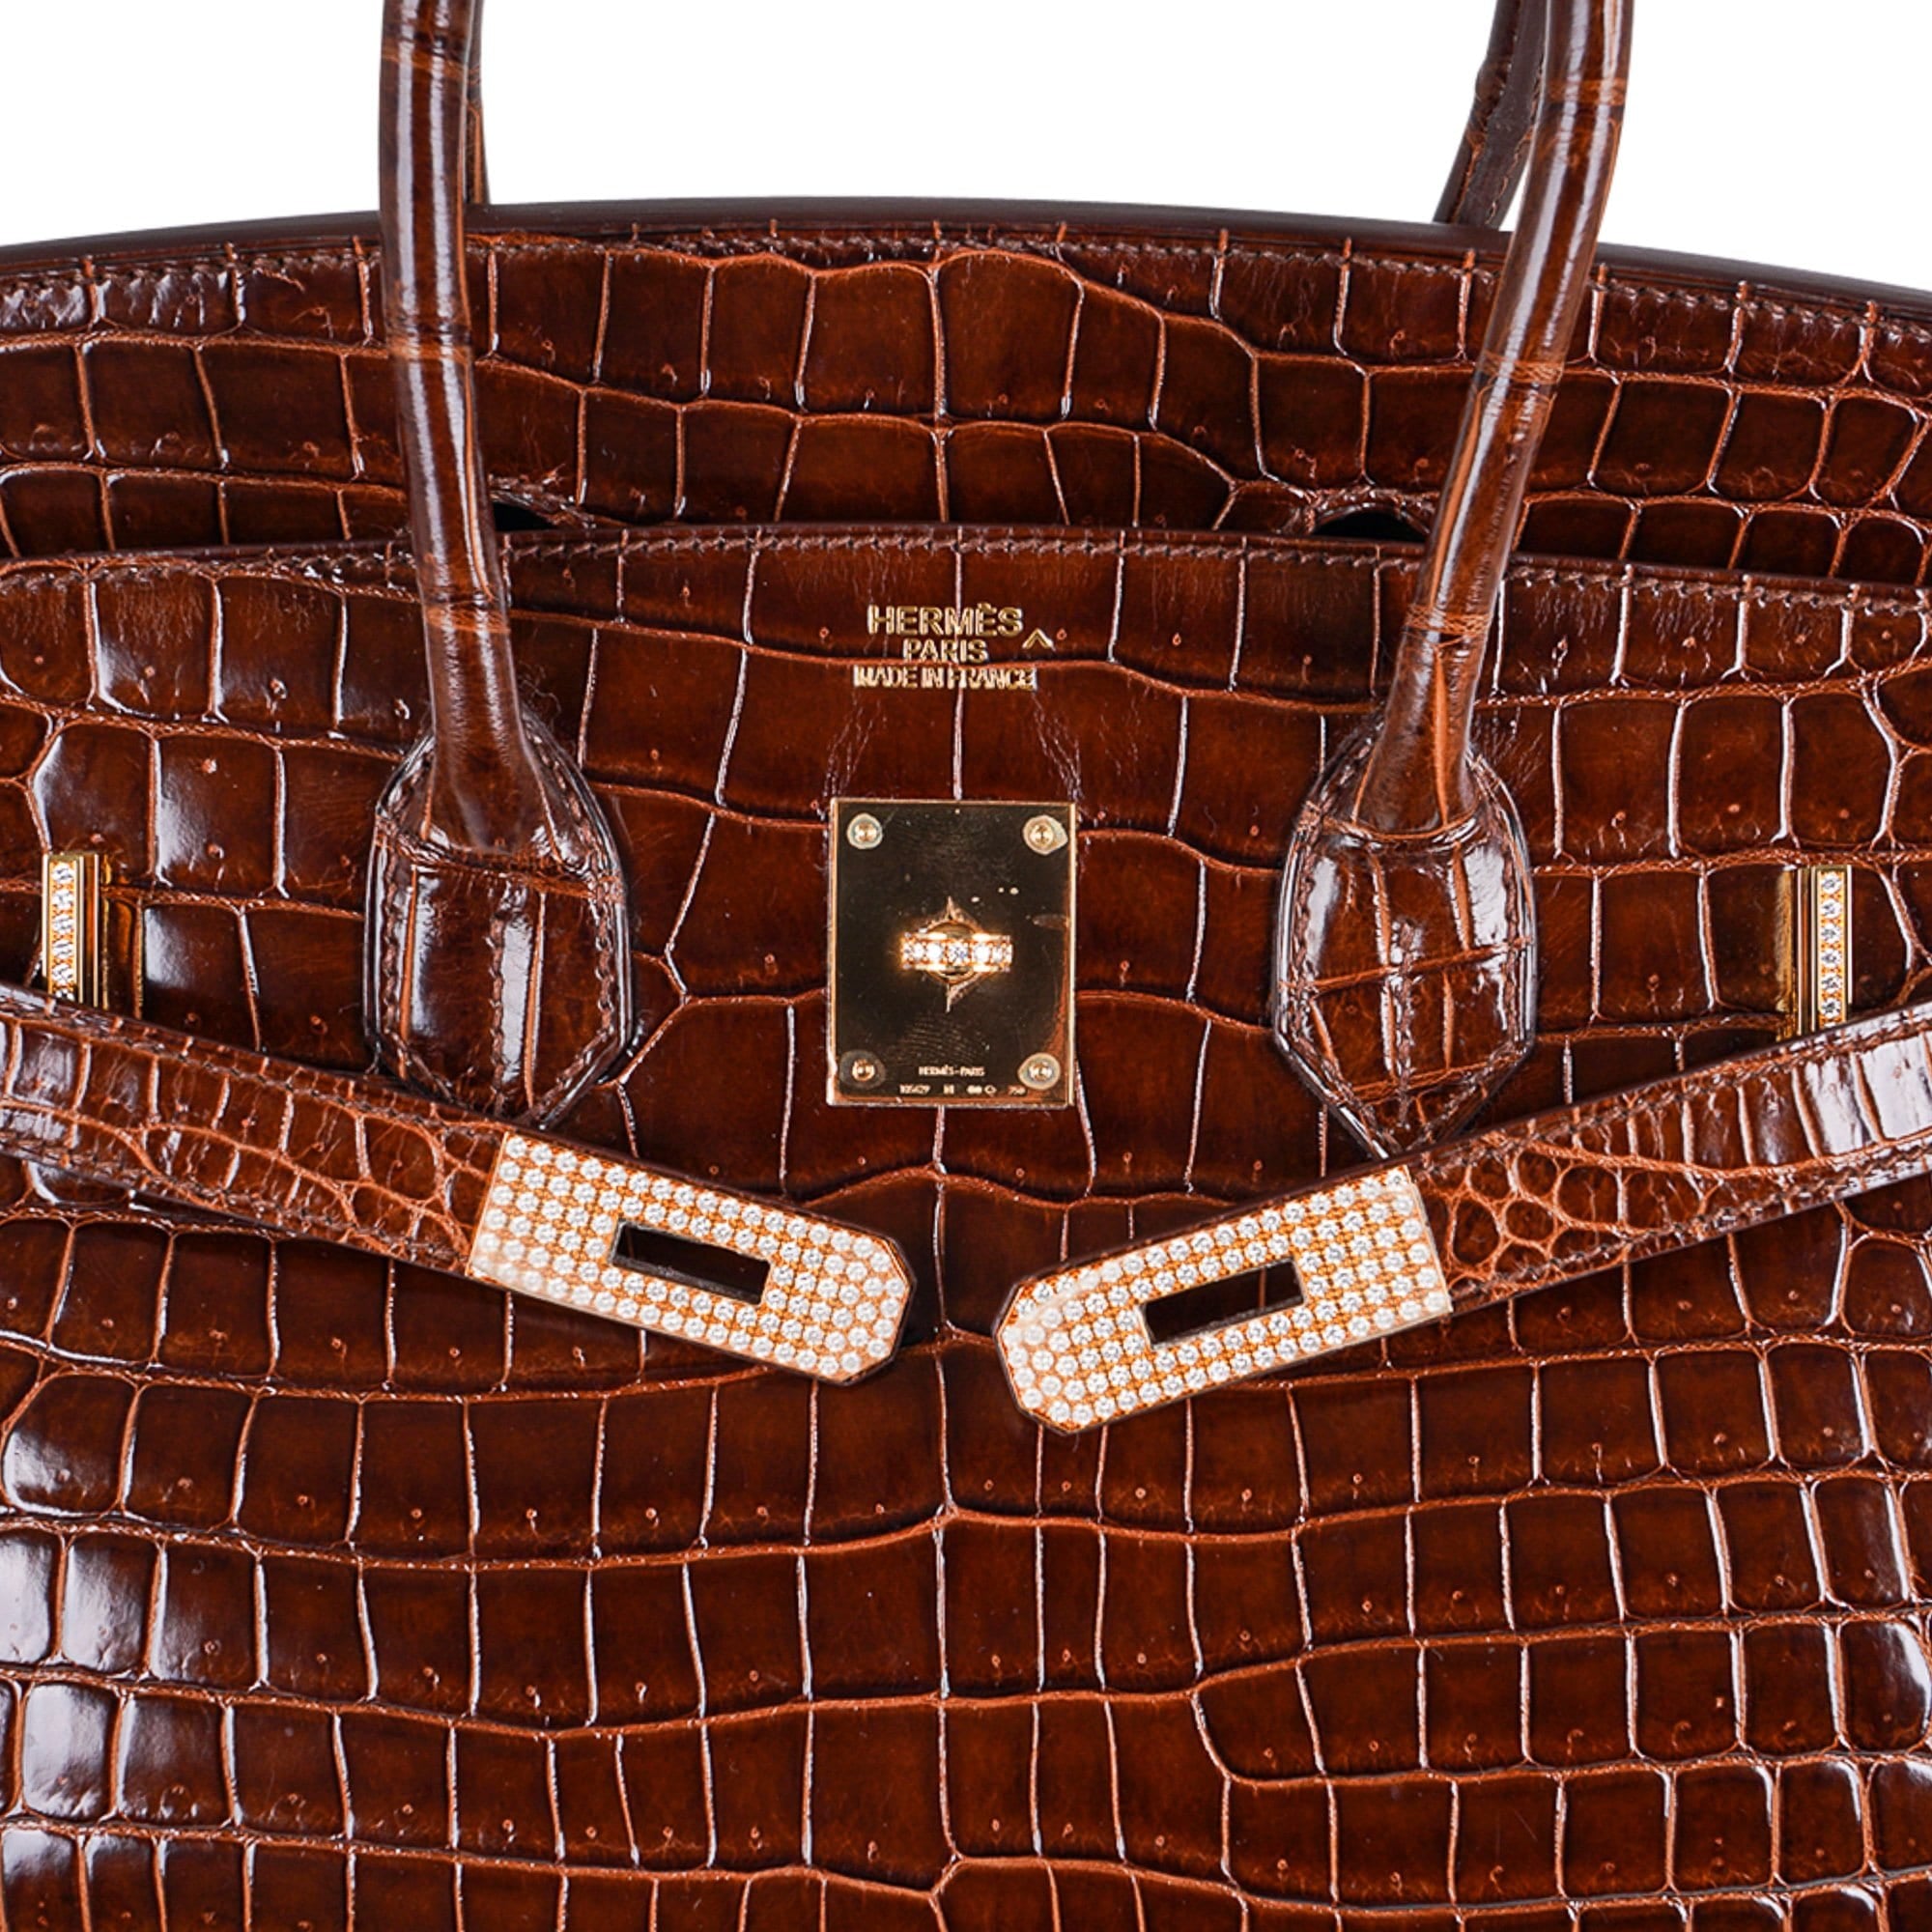 Crocodile-skin Hermes Birkin handbag with 18-karat diamonds sells